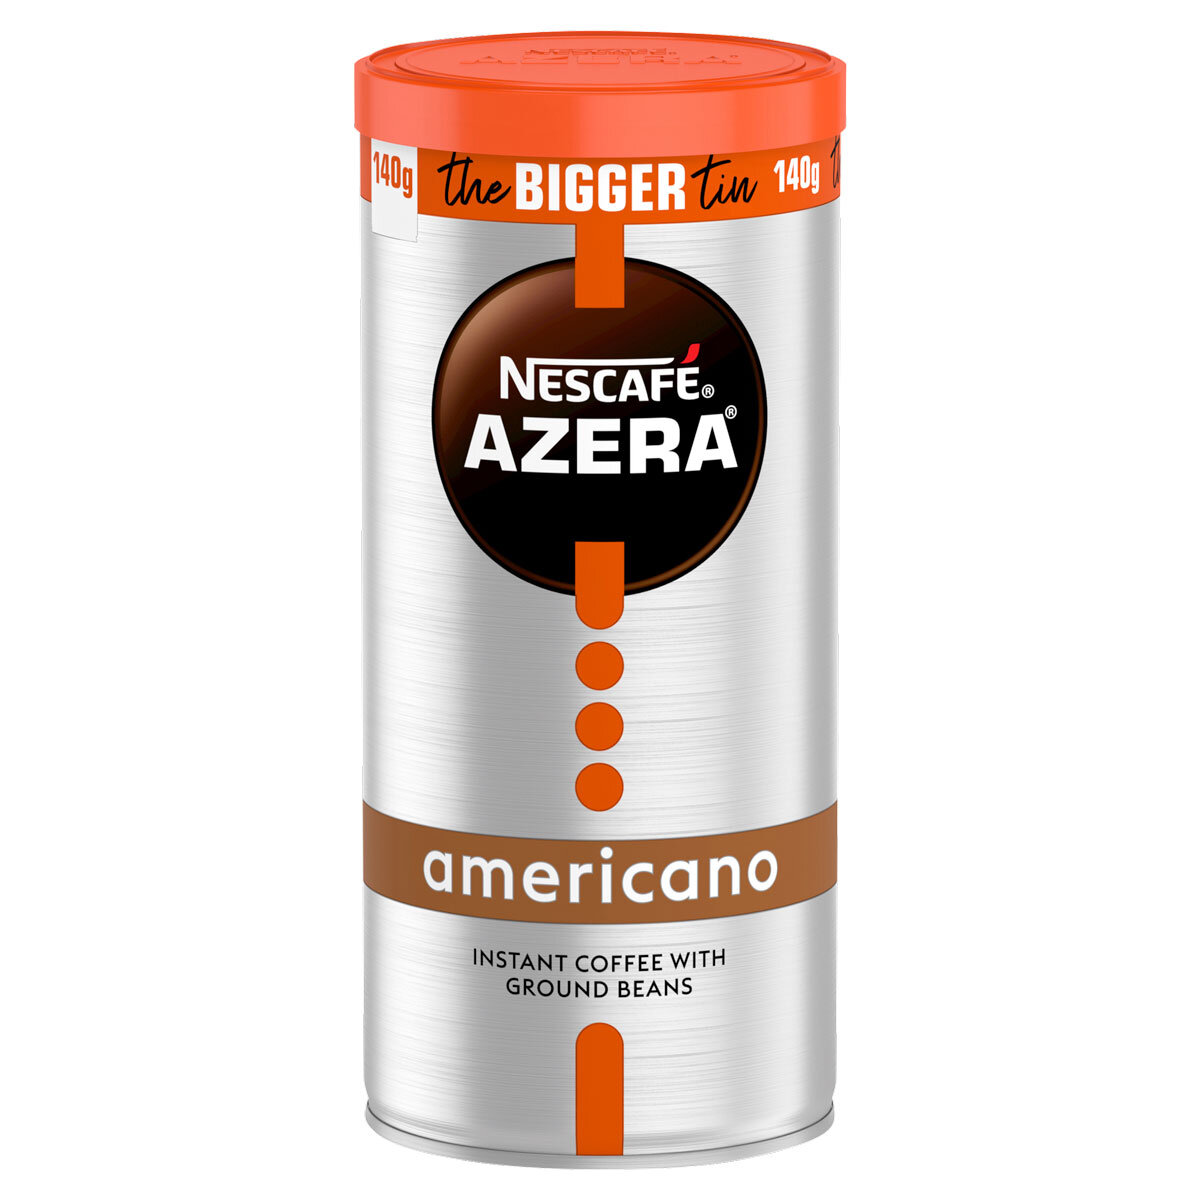 Nescafe Azera Americano Coffee with Ground Beans, 140g